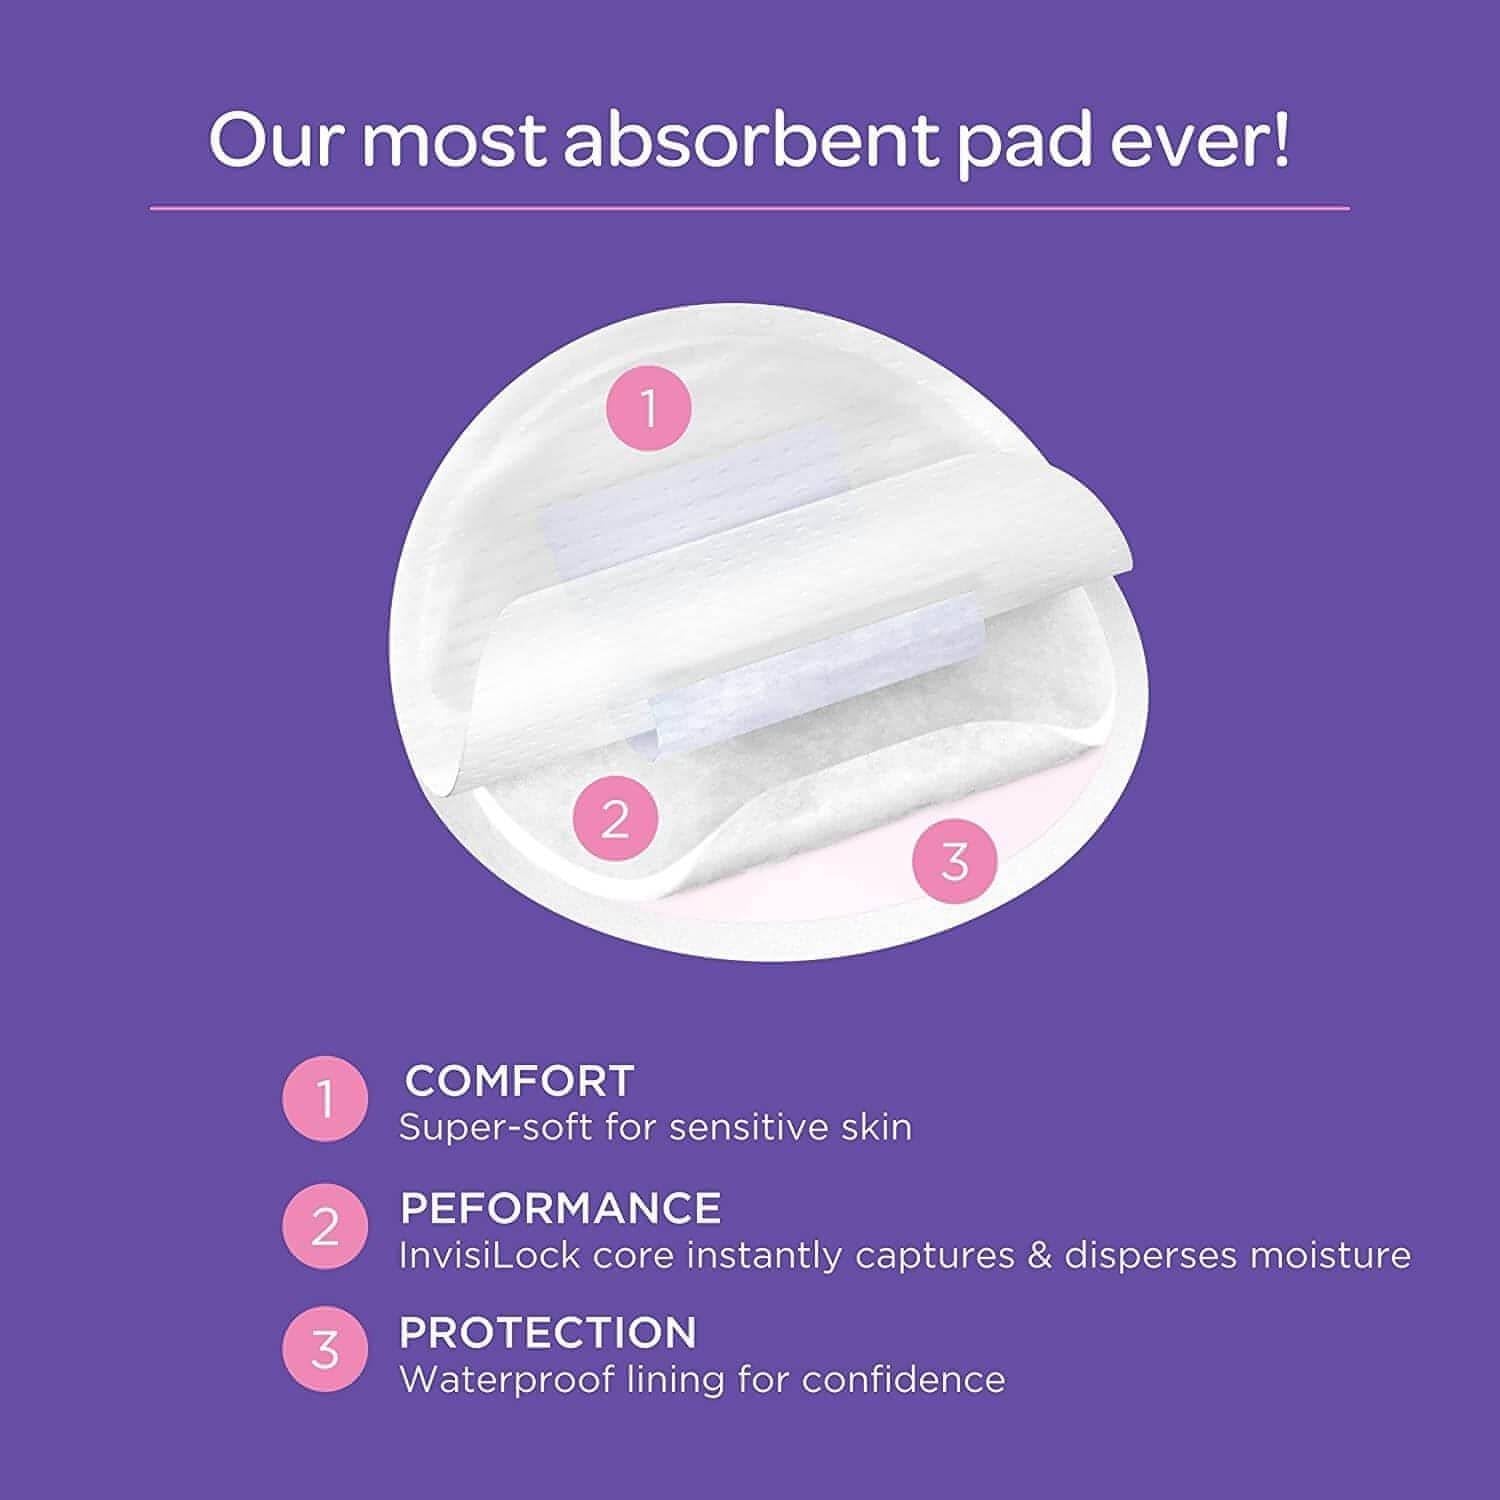 20 PCs Breastfeeding Nursing Disposable Pads  Prevents Spillage Of Breast  Milk - NextMamas